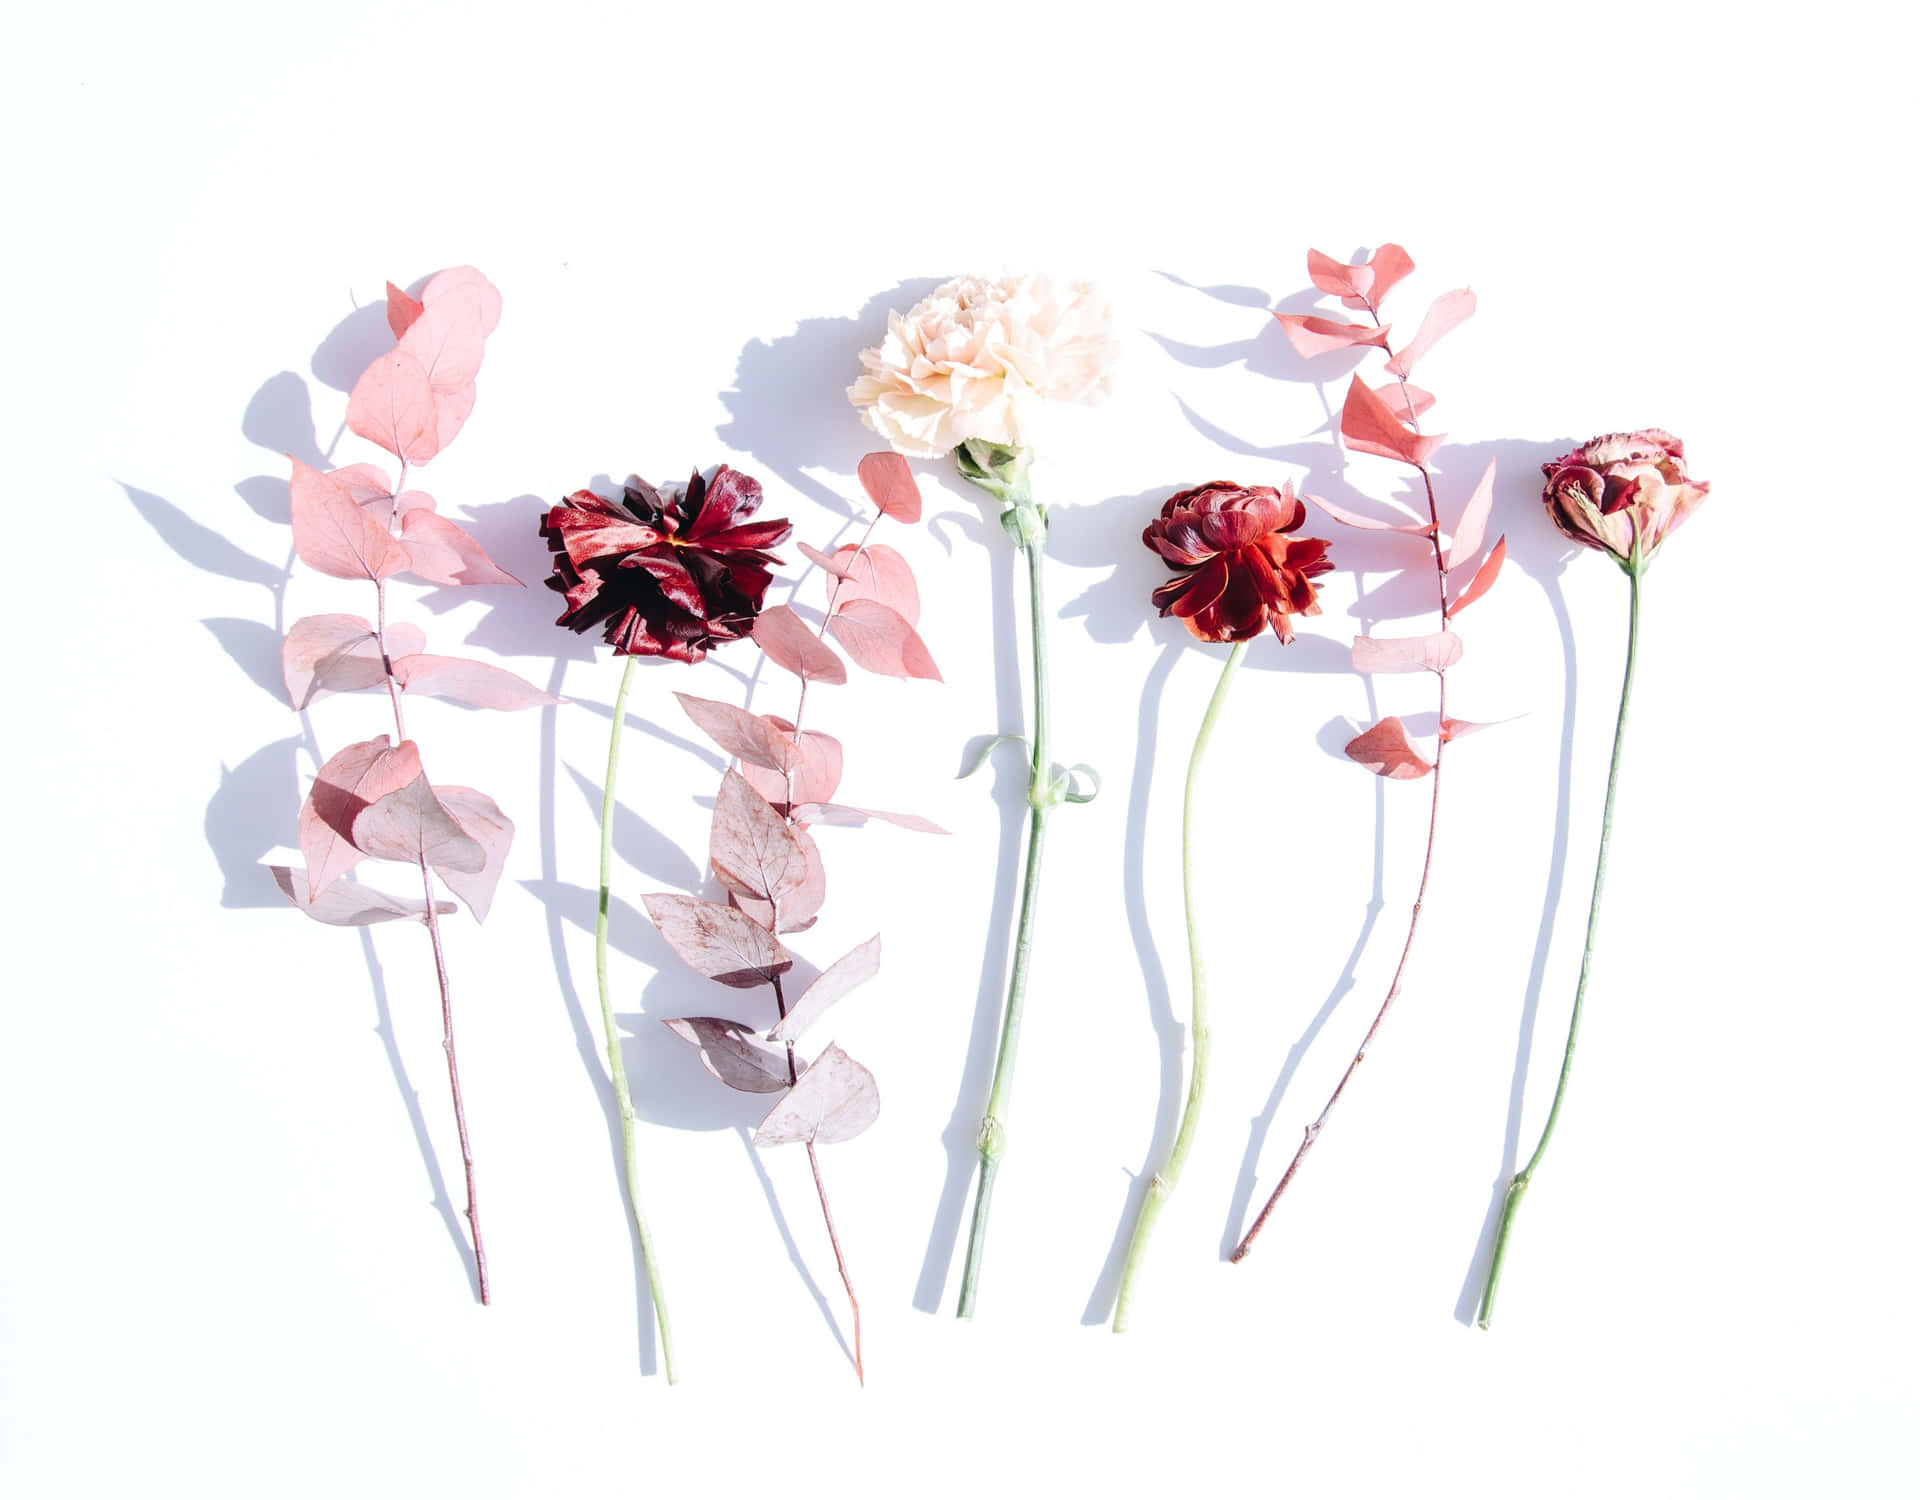 Take a Closer Look at this Minimalist Fine Art Flower Wallpaper